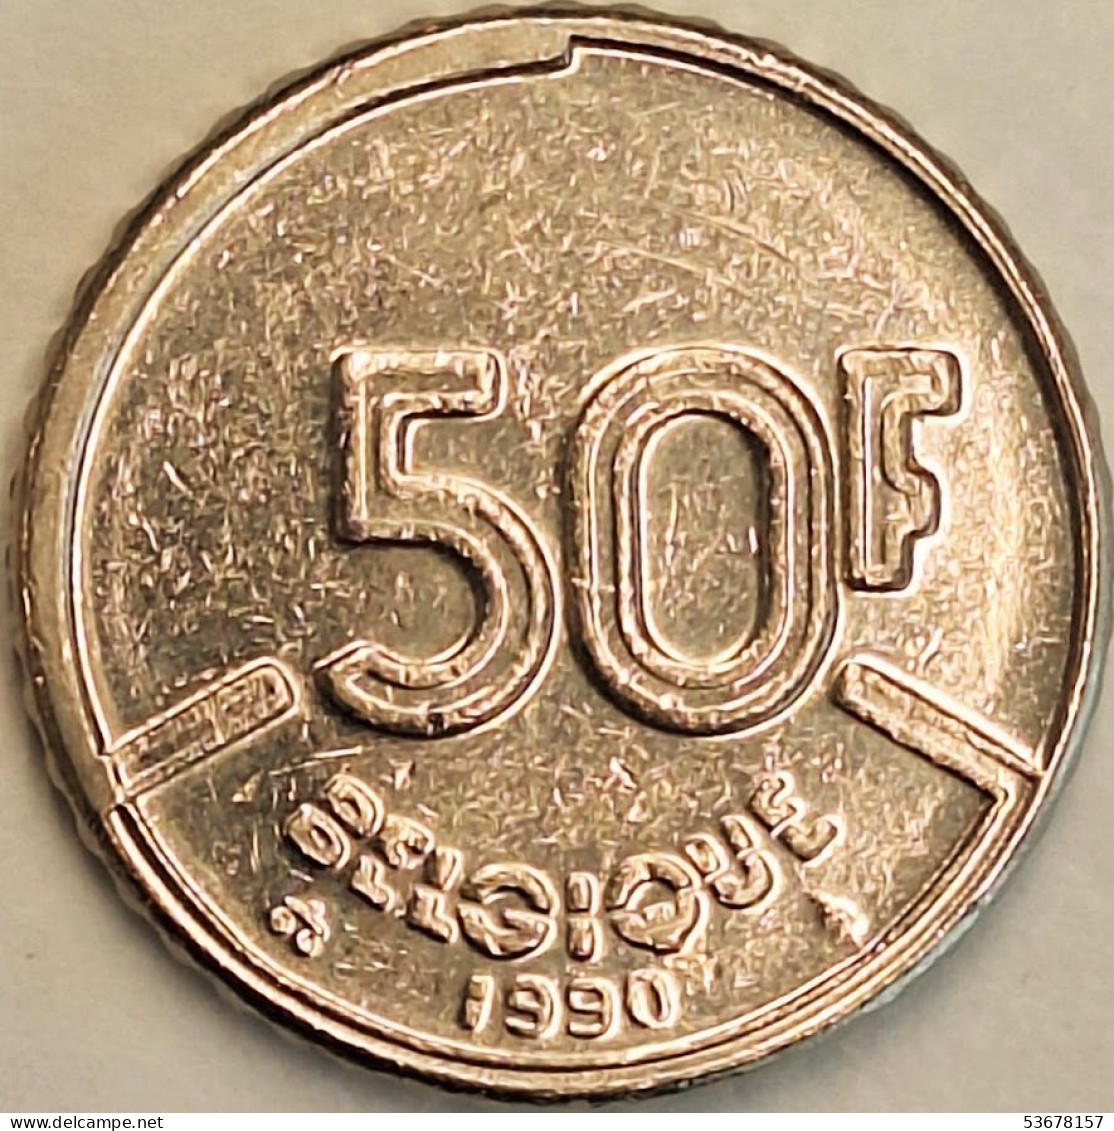 Belgium - 50 Francs 1990, KM# 168 (#3209) - 50 Frank